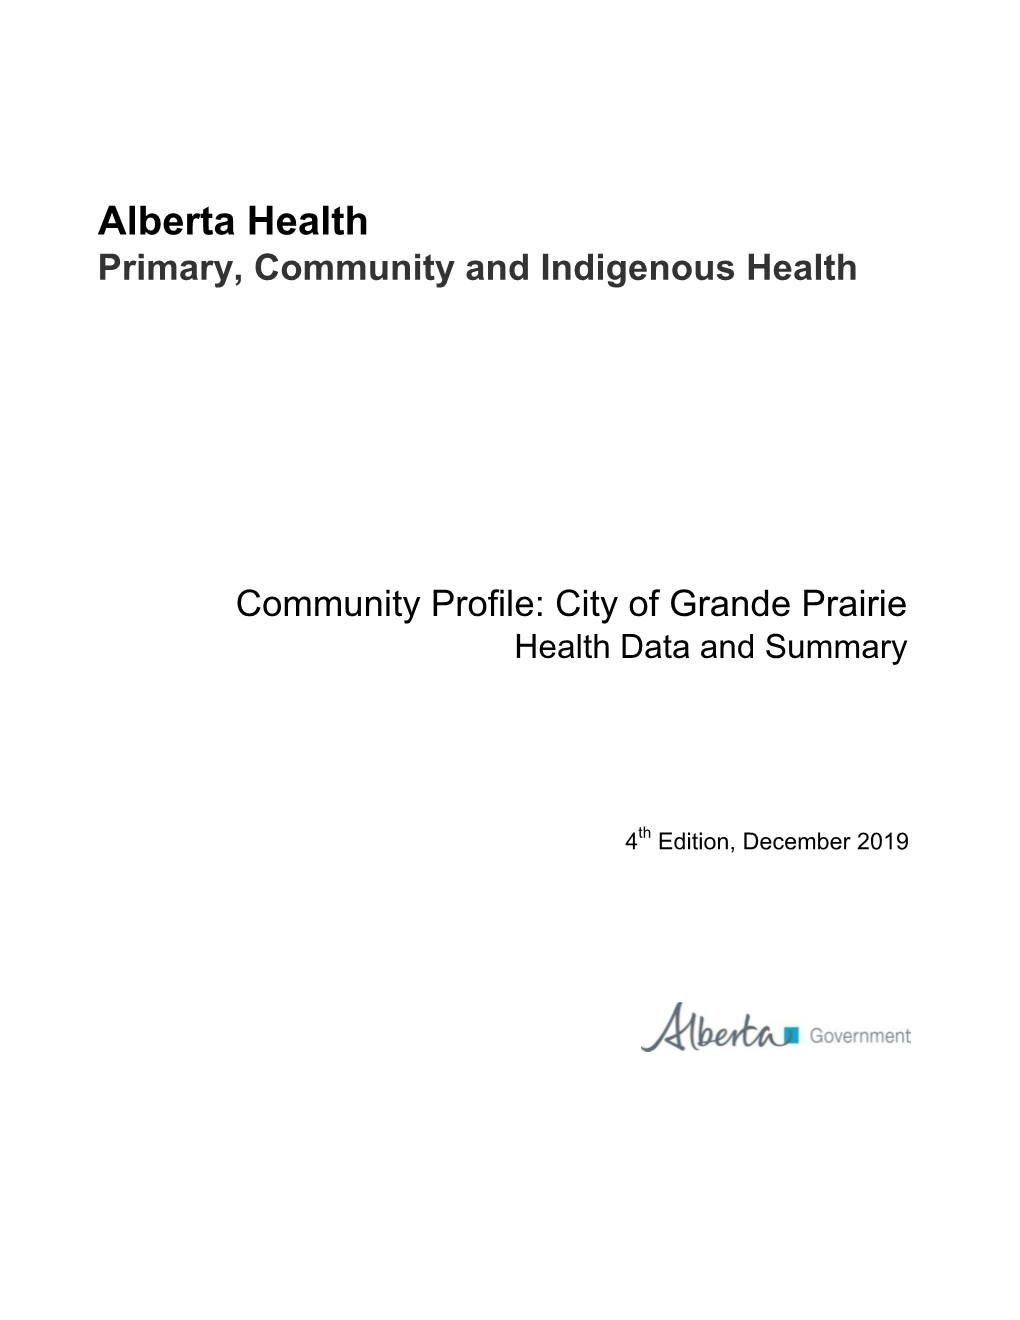 Community Profile: City of Grande Prairie Health Data and Summary